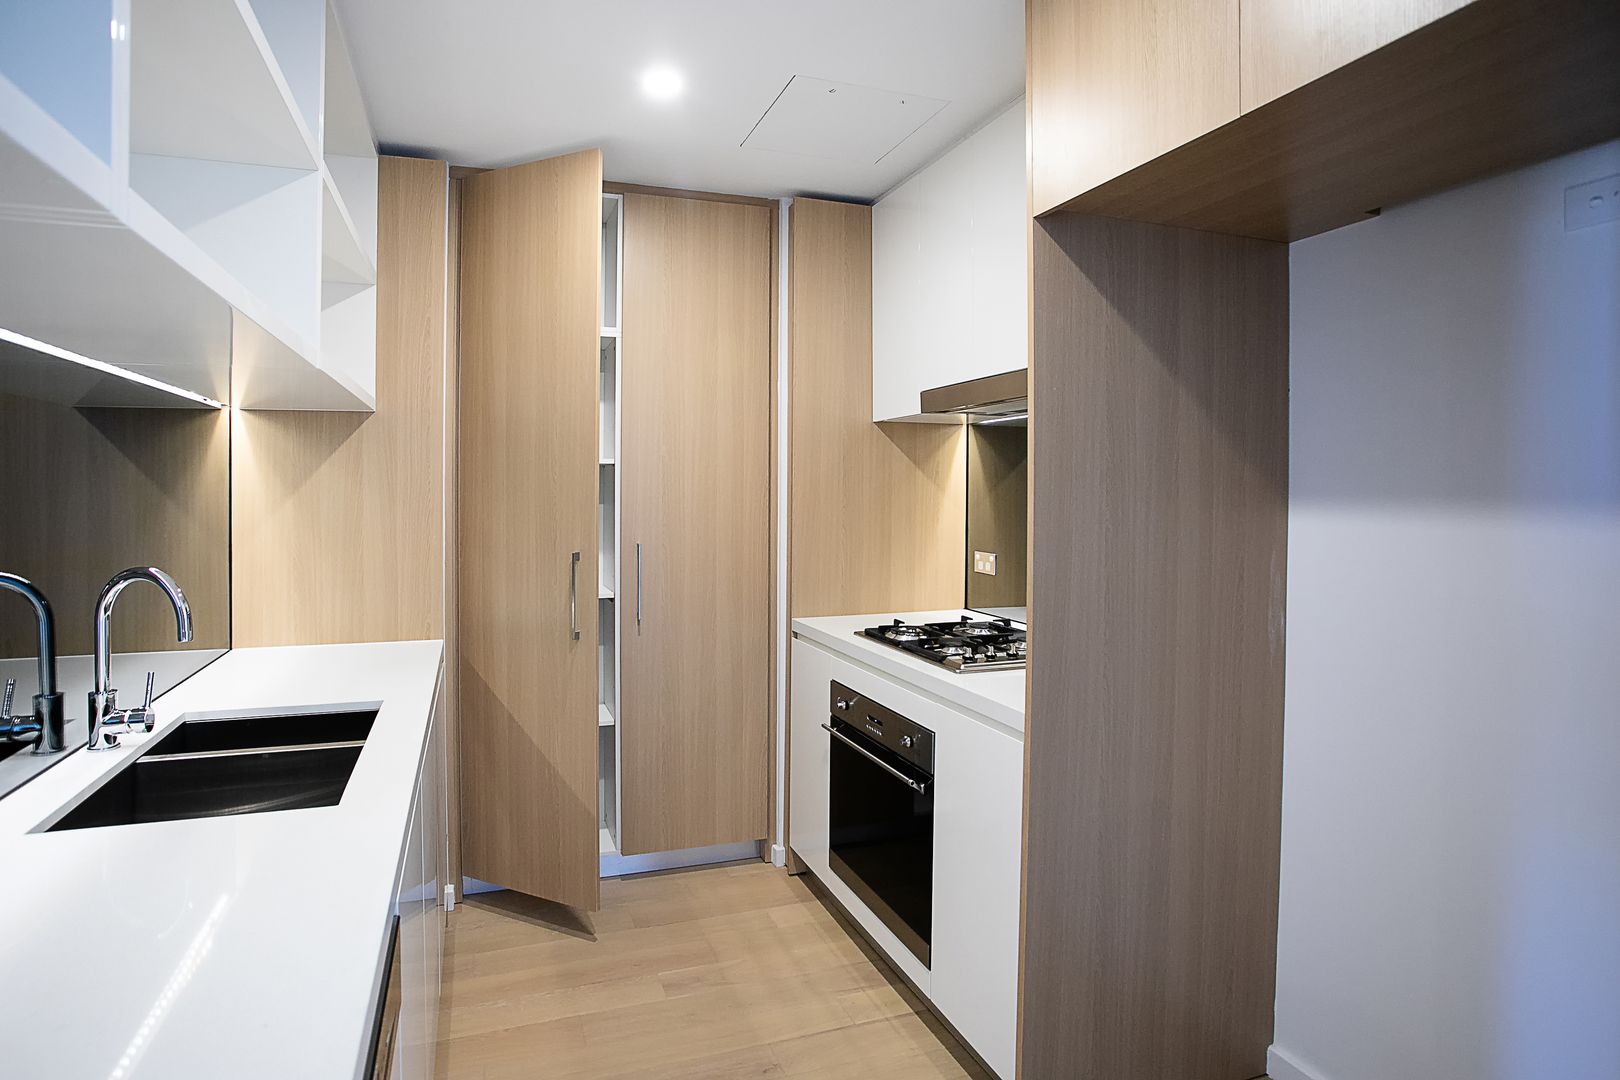 2 bedrooms Apartment / Unit / Flat in 102/12 Paul Street ZETLAND NSW, 2017